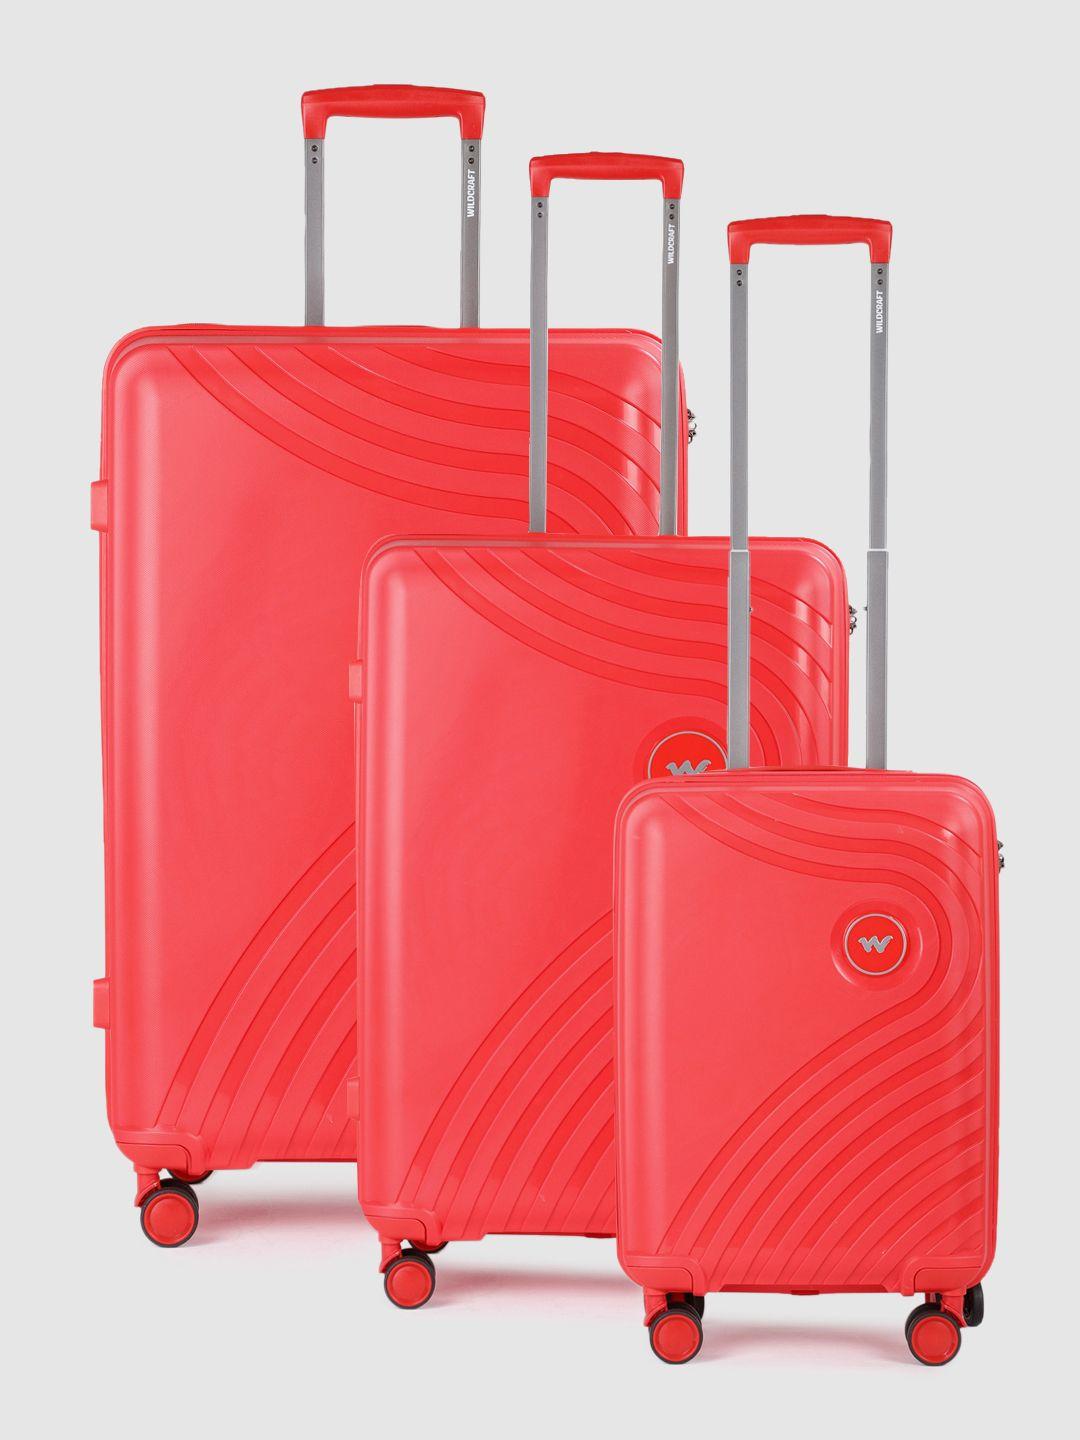 wildcraft set of 3 onyx trolley suitcases - cabin, medium & large